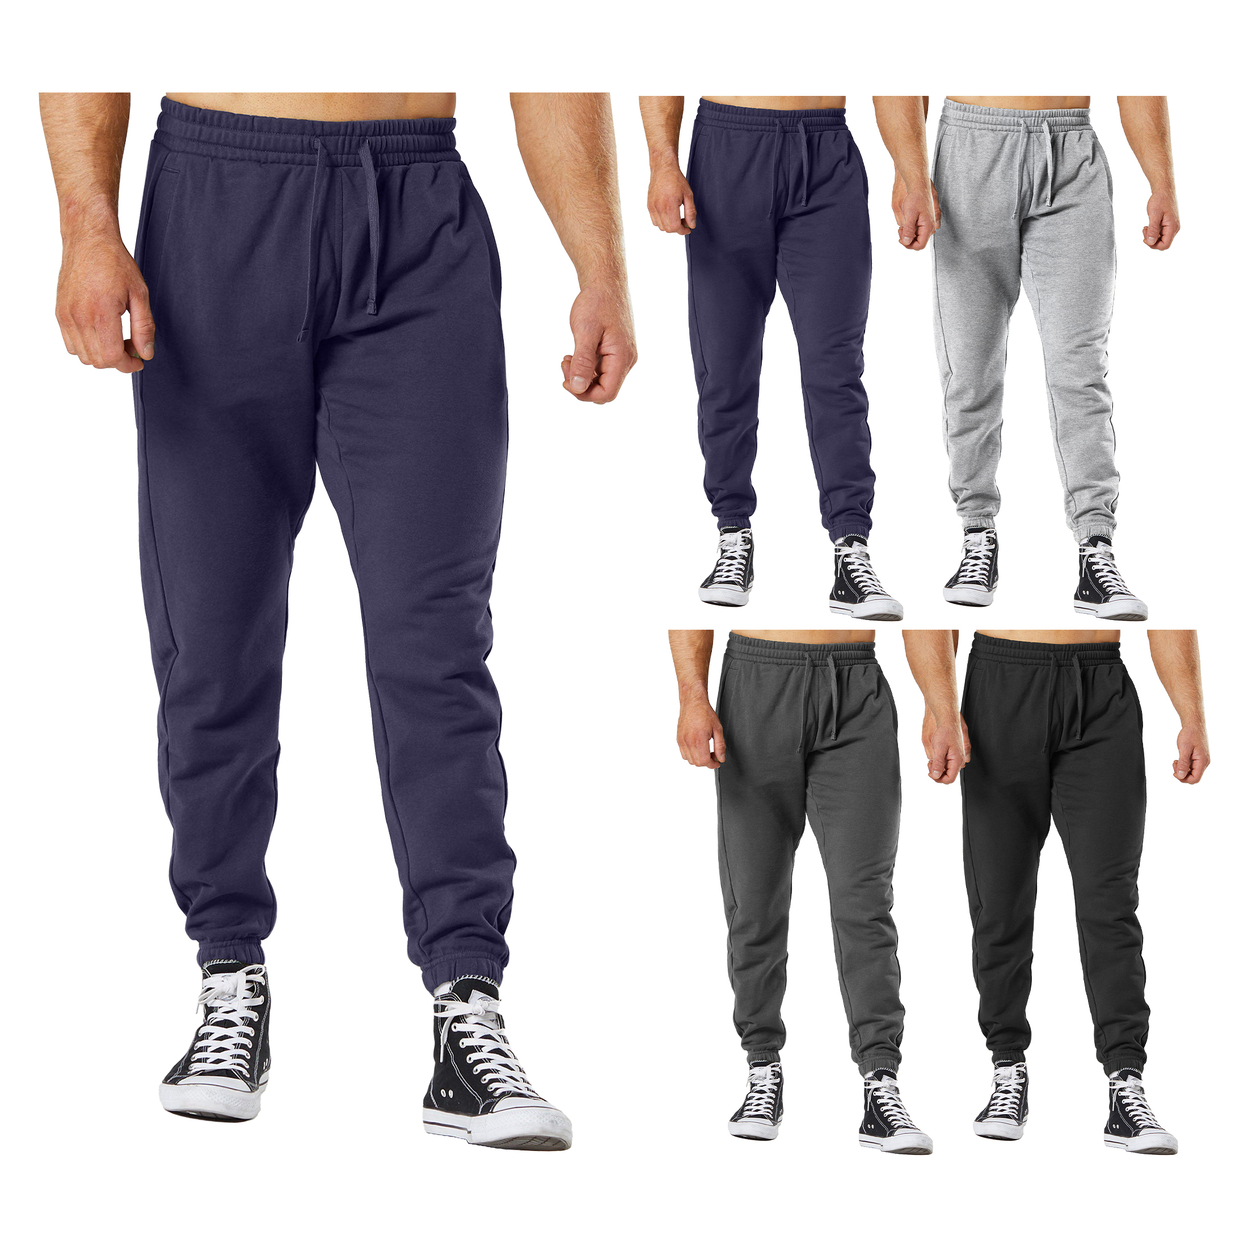 2-Pack: Men's Ultra-Soft Cozy Winter Warm Casual Fleece-Lined Sweatpants Jogger - Black & Navy, Small